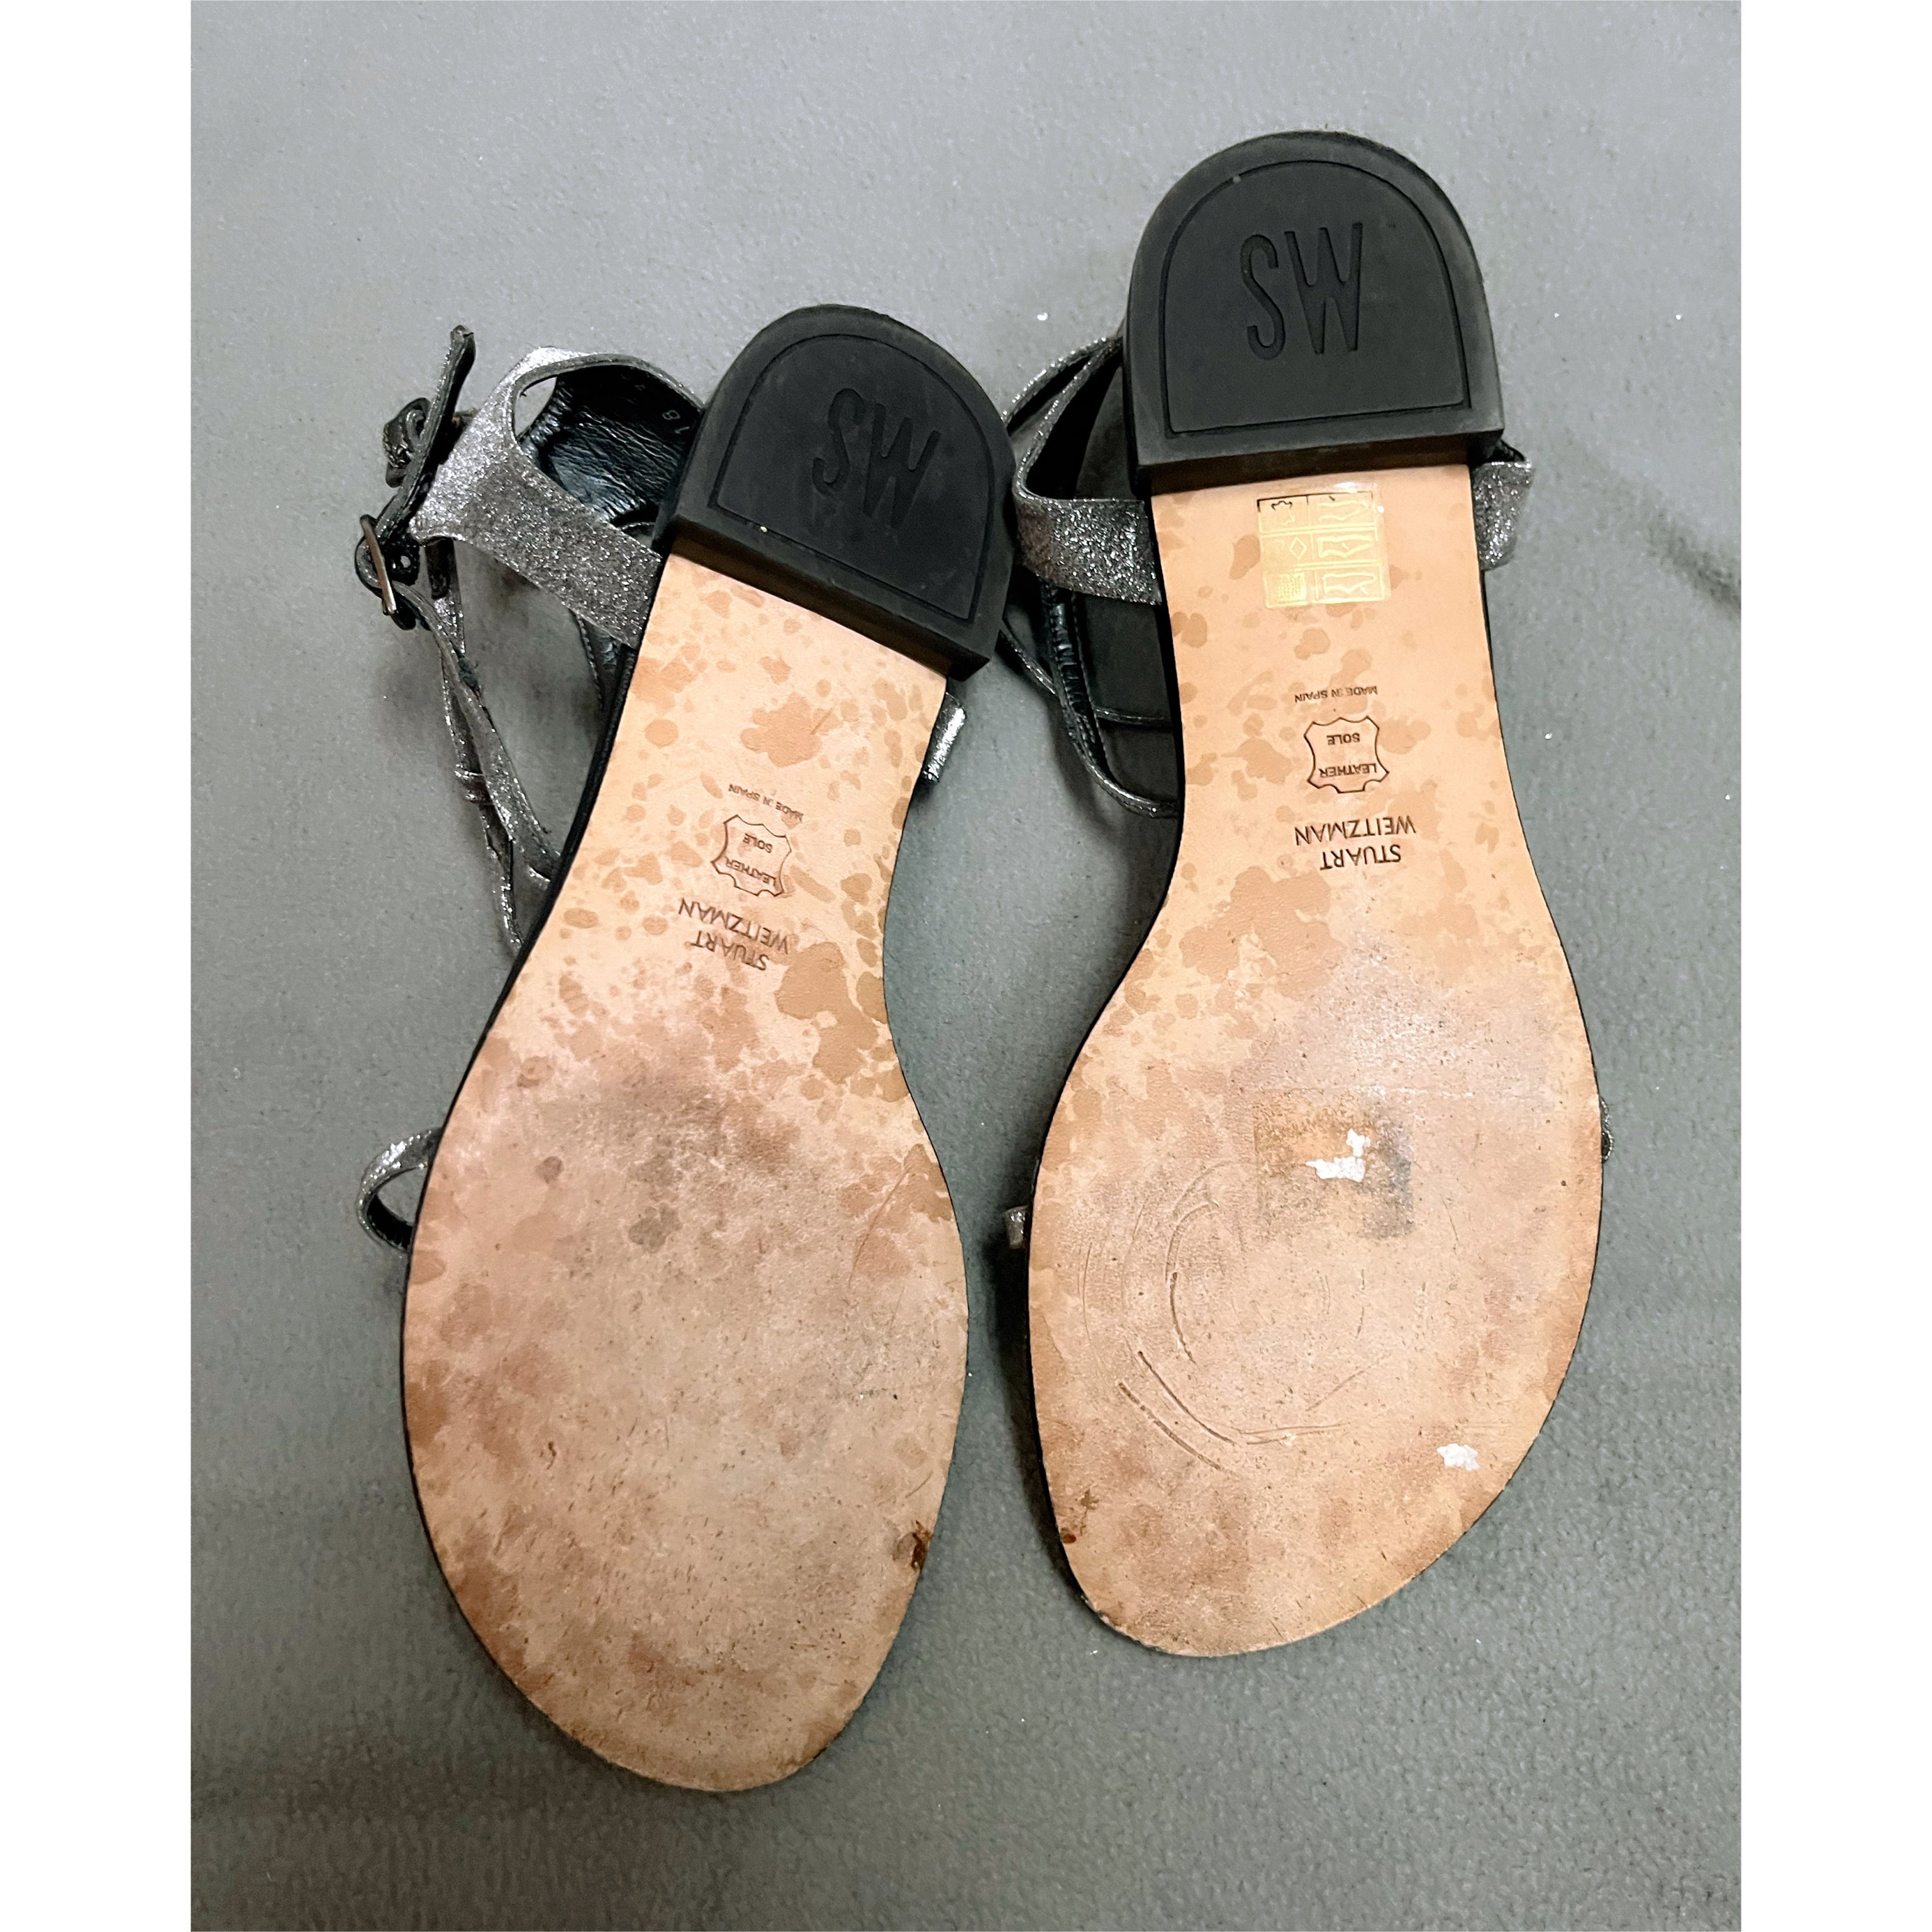 Stuart Weitzman metallic pewter sandals, size 9